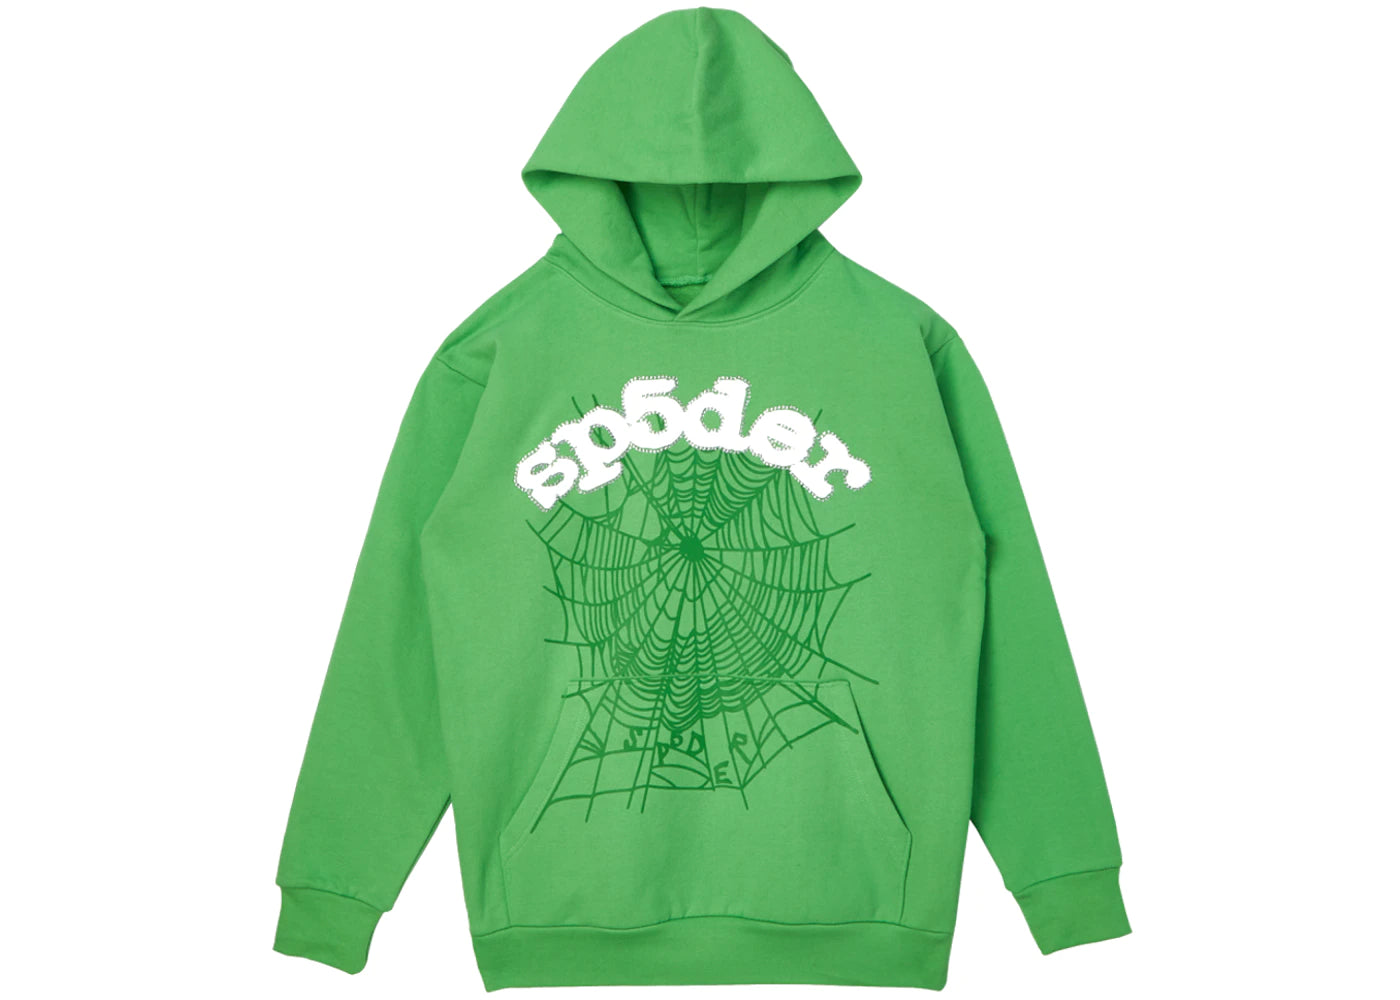 Sp5der Websuit Hoodie Green